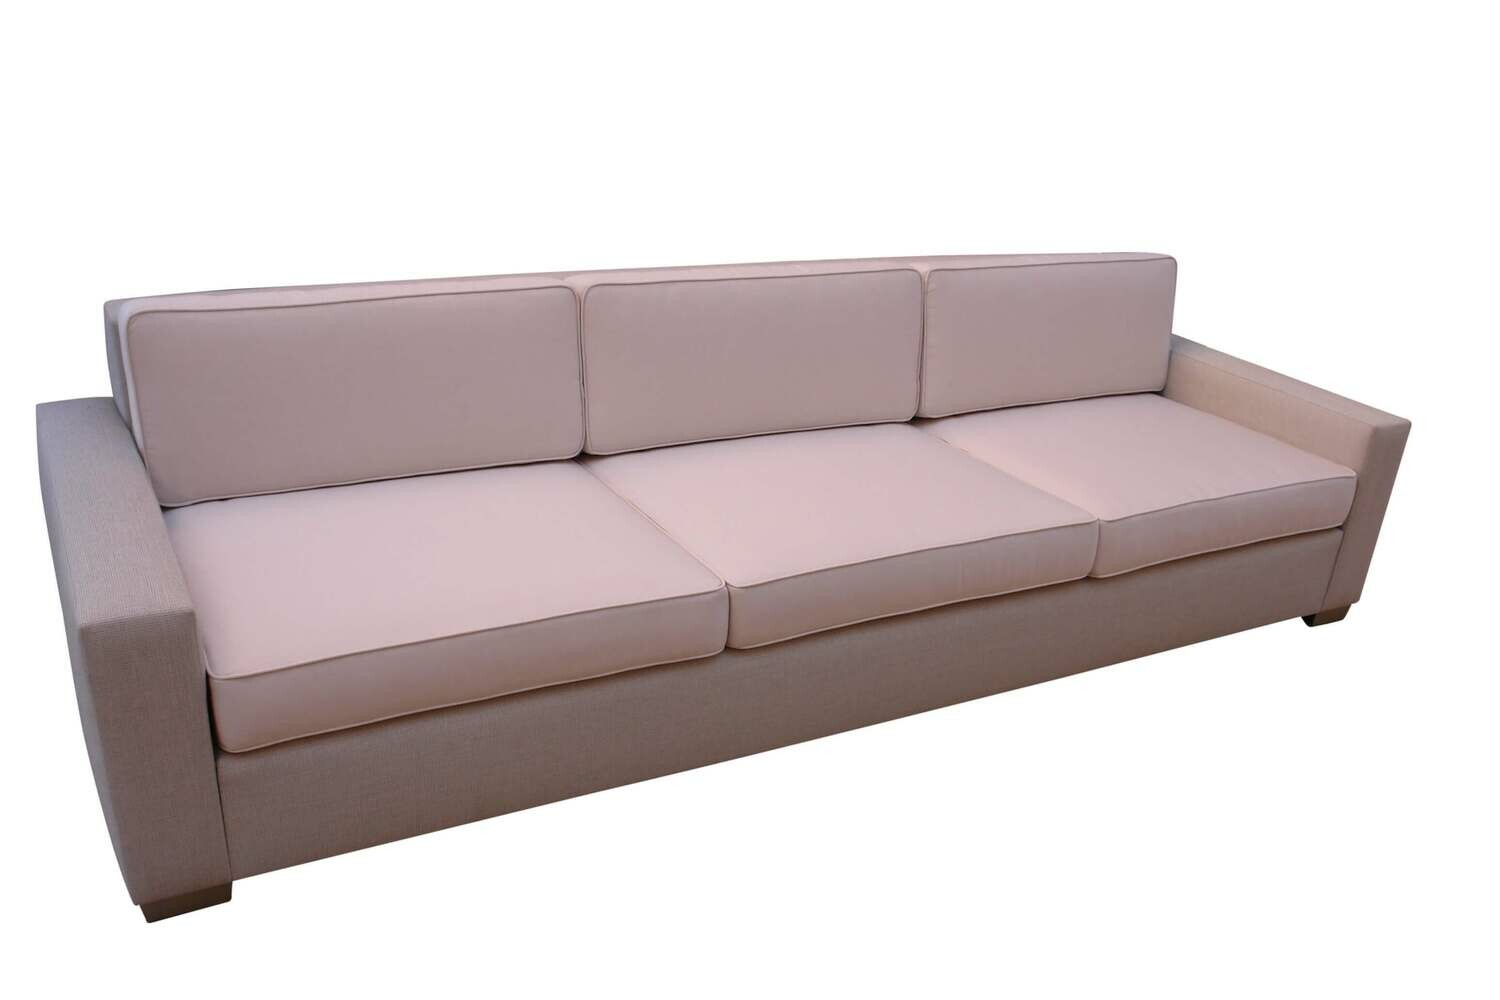 10 Foot Loose Cushion Sofa